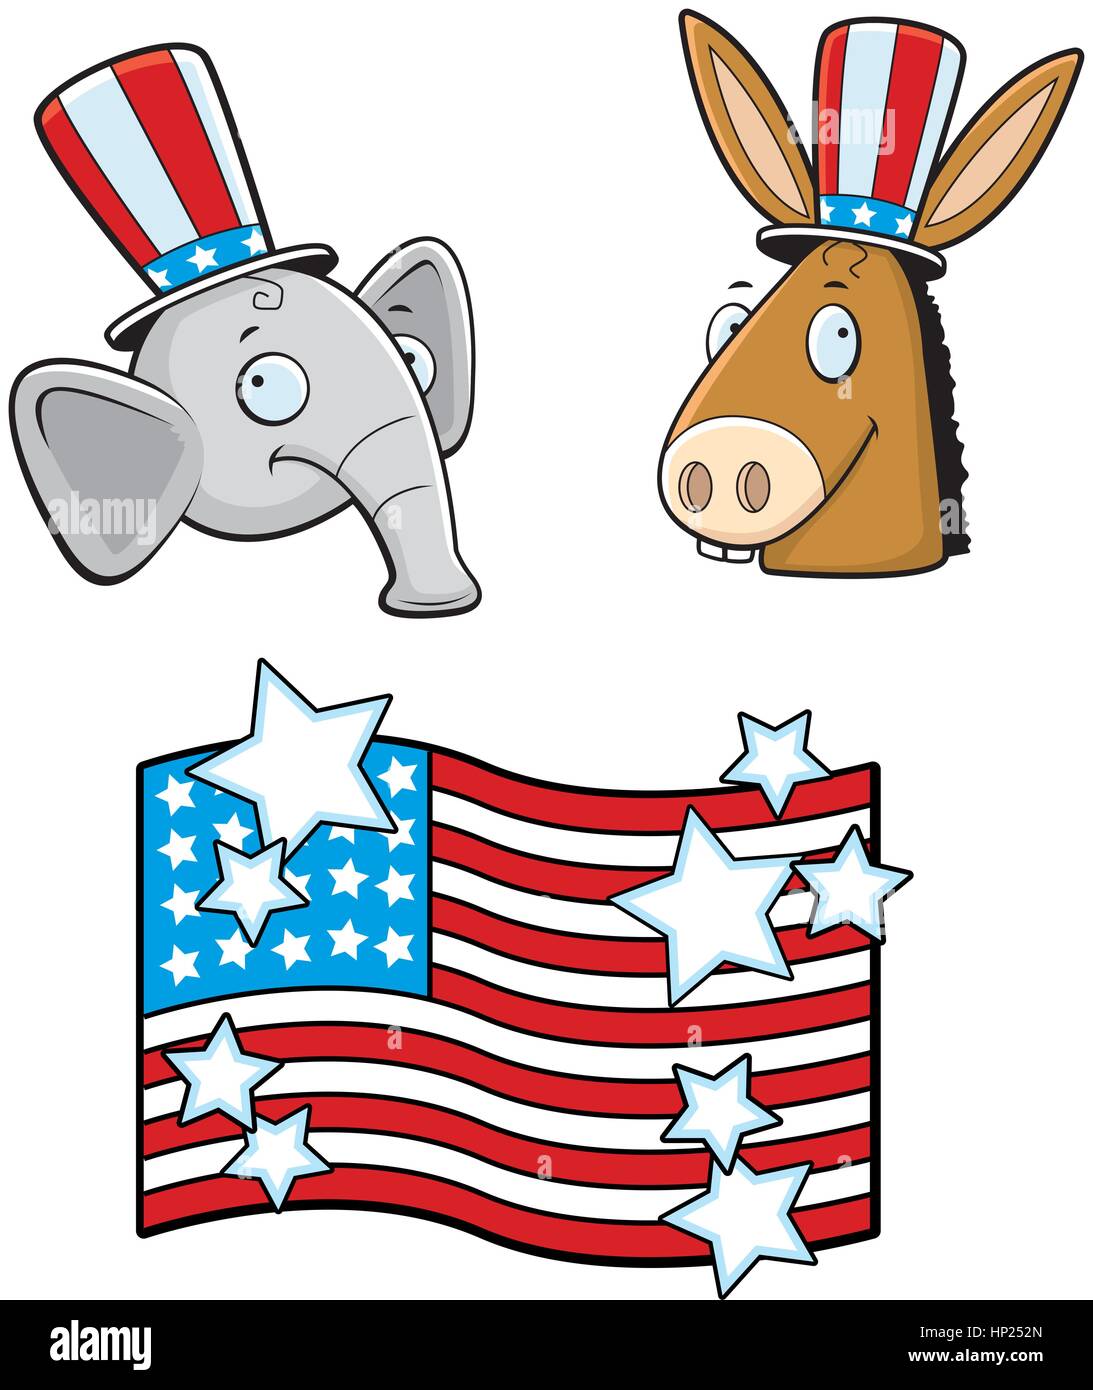 clipart donkey and elephant politics